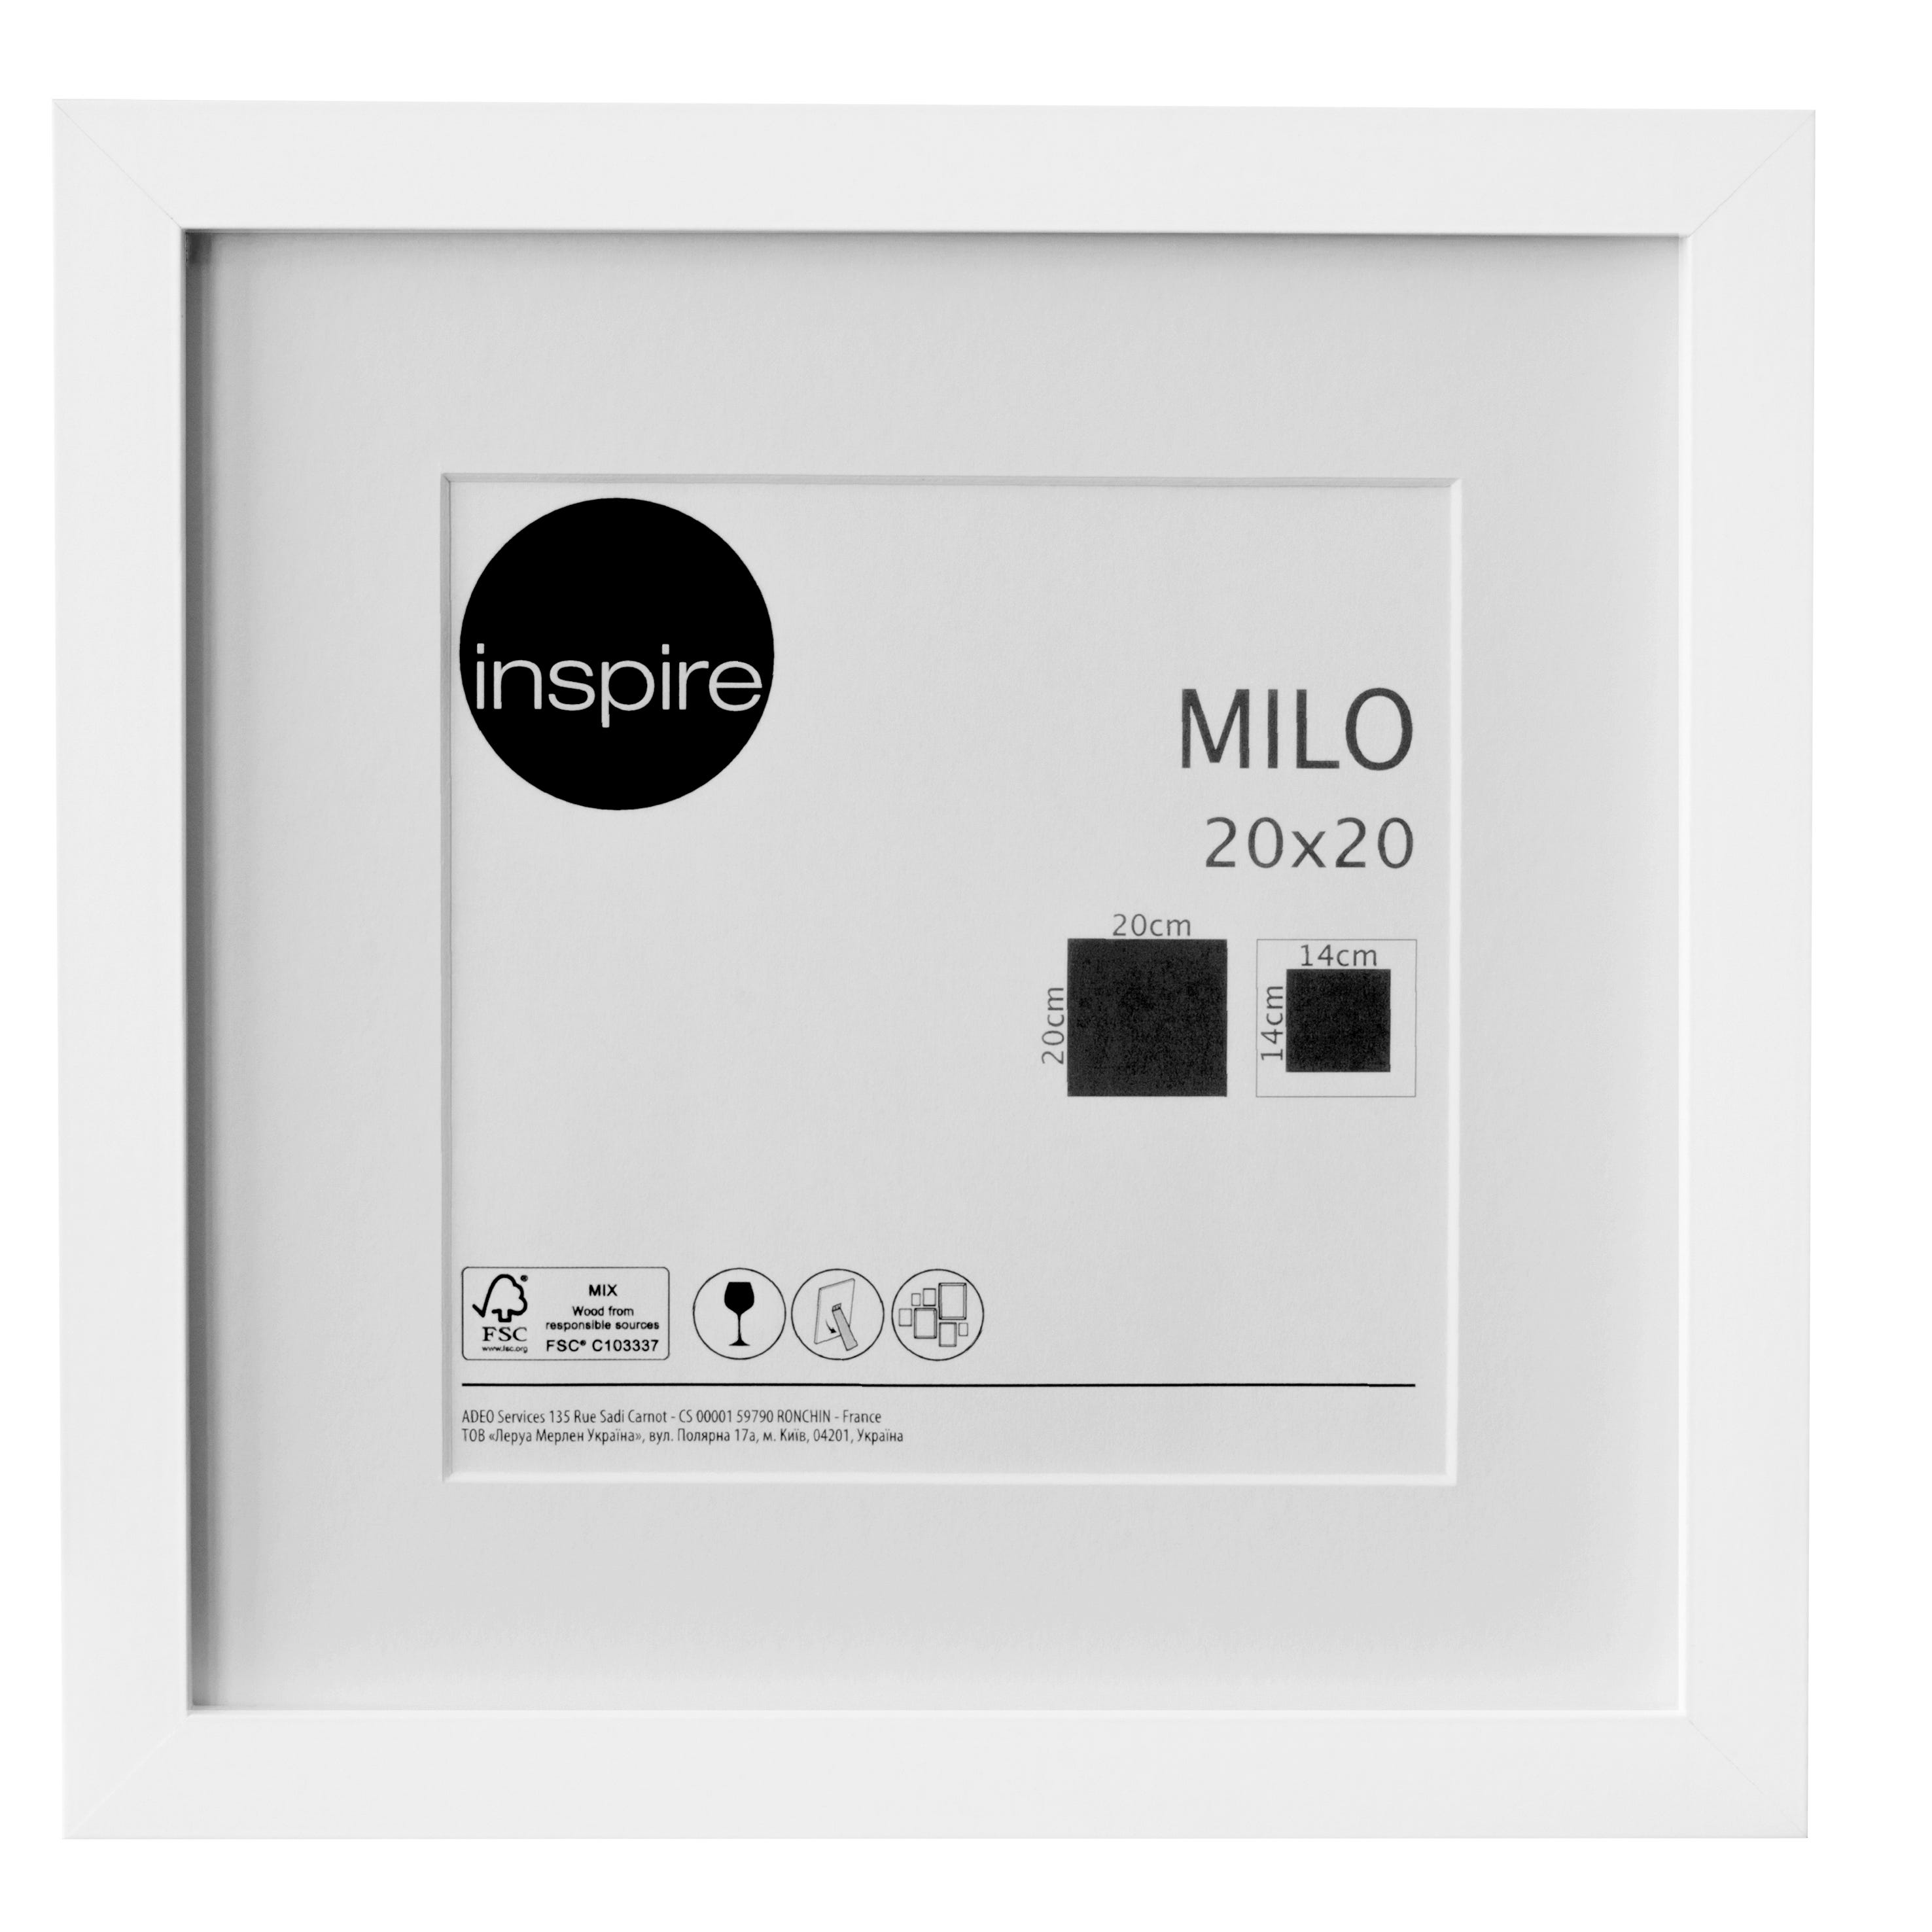 Marco Milo blanco INSPIRE 20x20cm